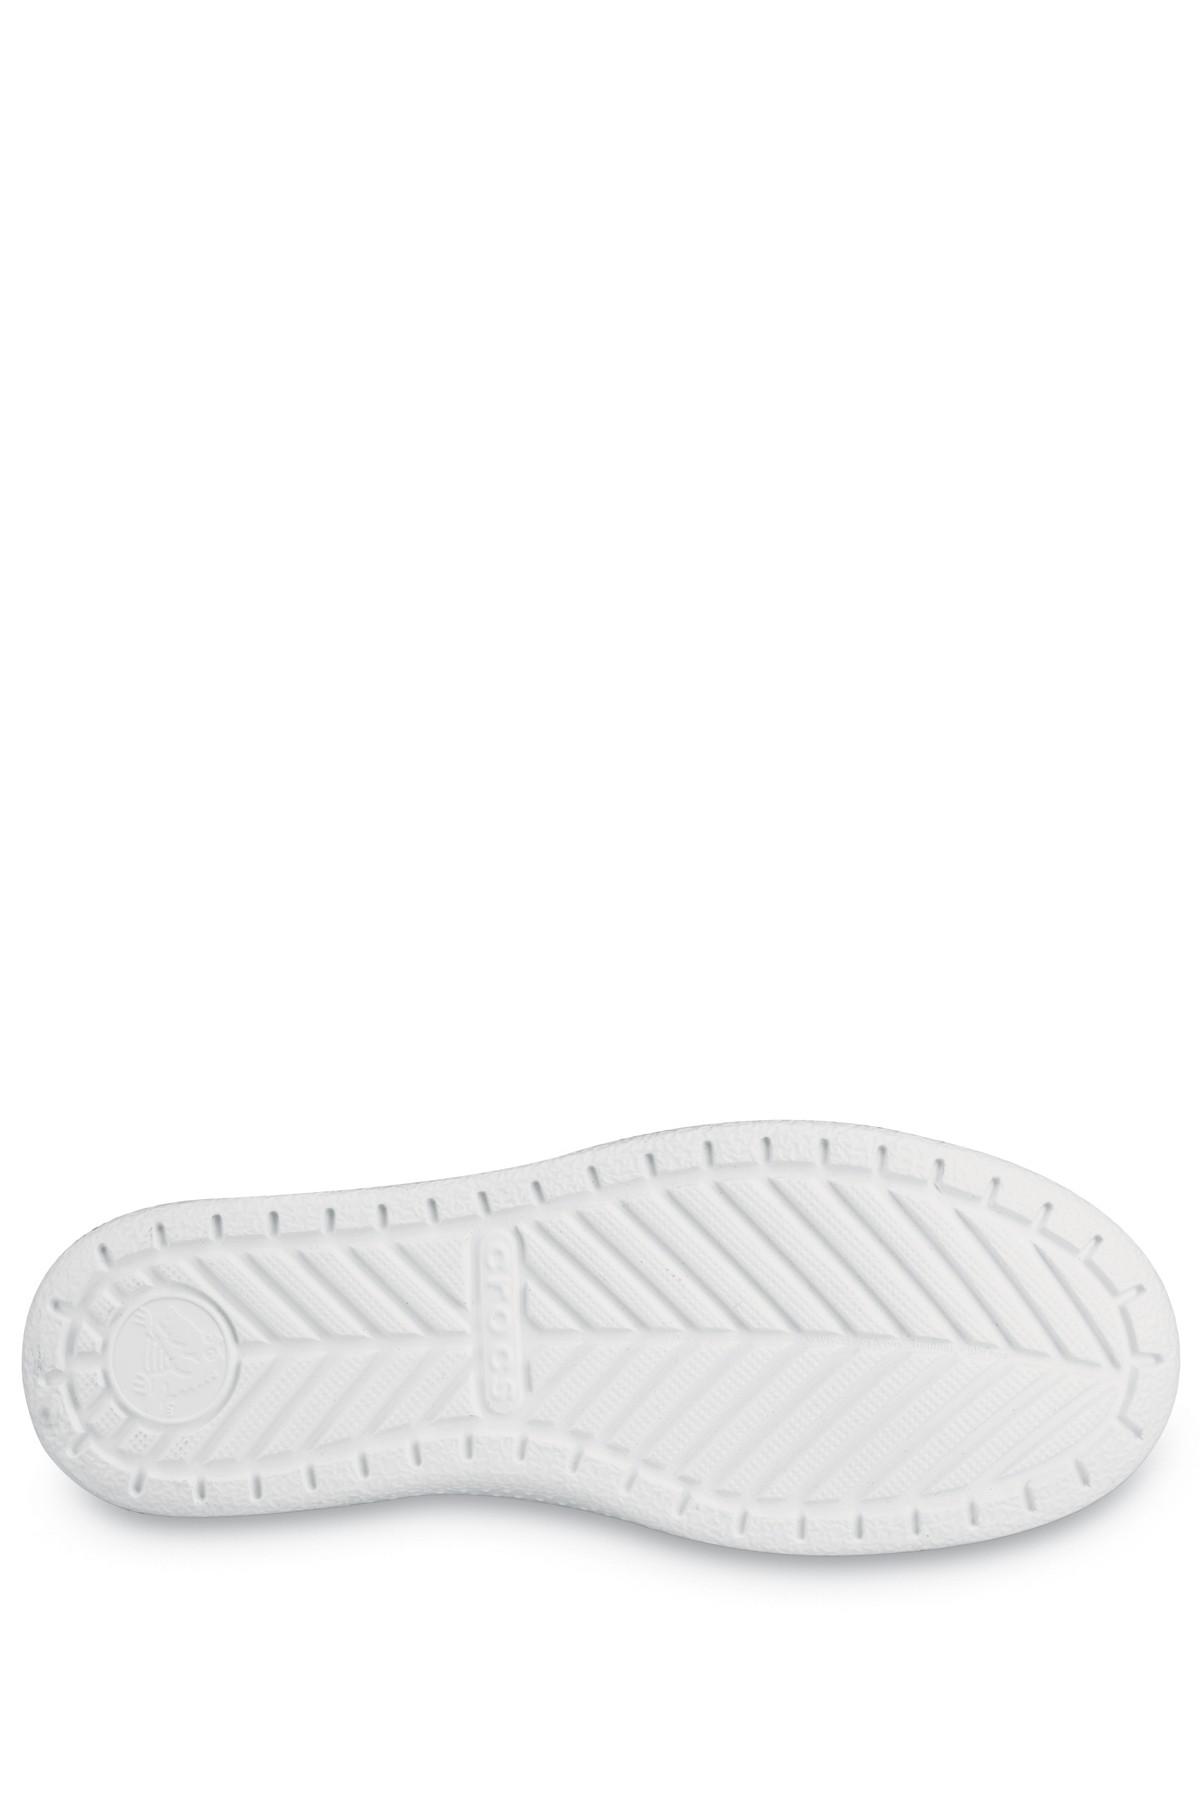 Crocs™ Hover Lace-up Sneaker in Black for Men | Lyst